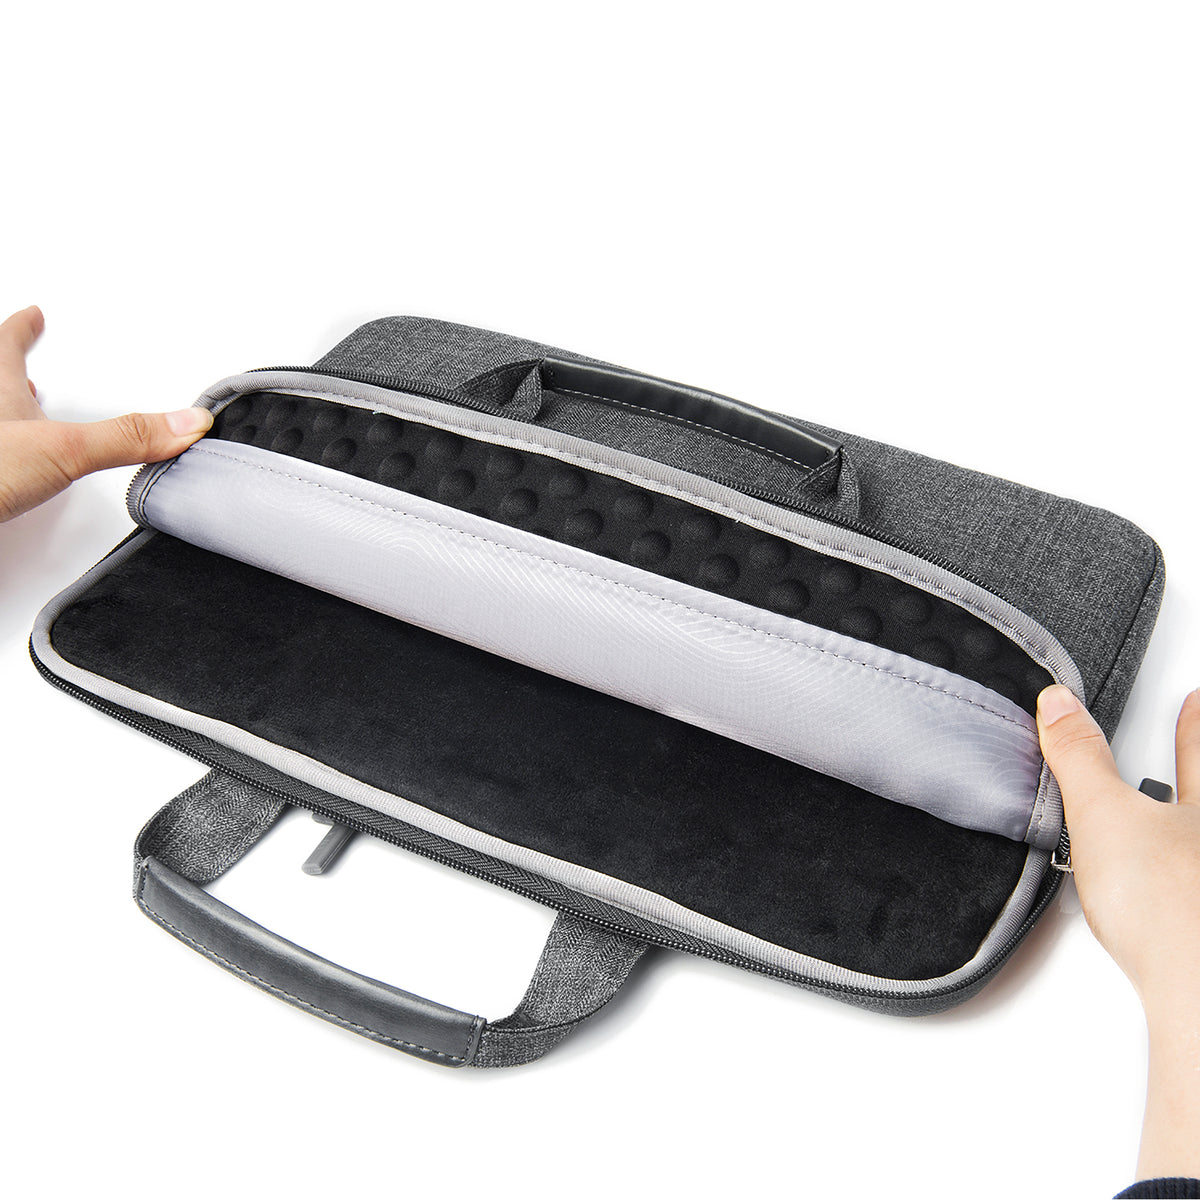 SATECHI Fabric Laptop Carrying Bag 13-inch - Gray